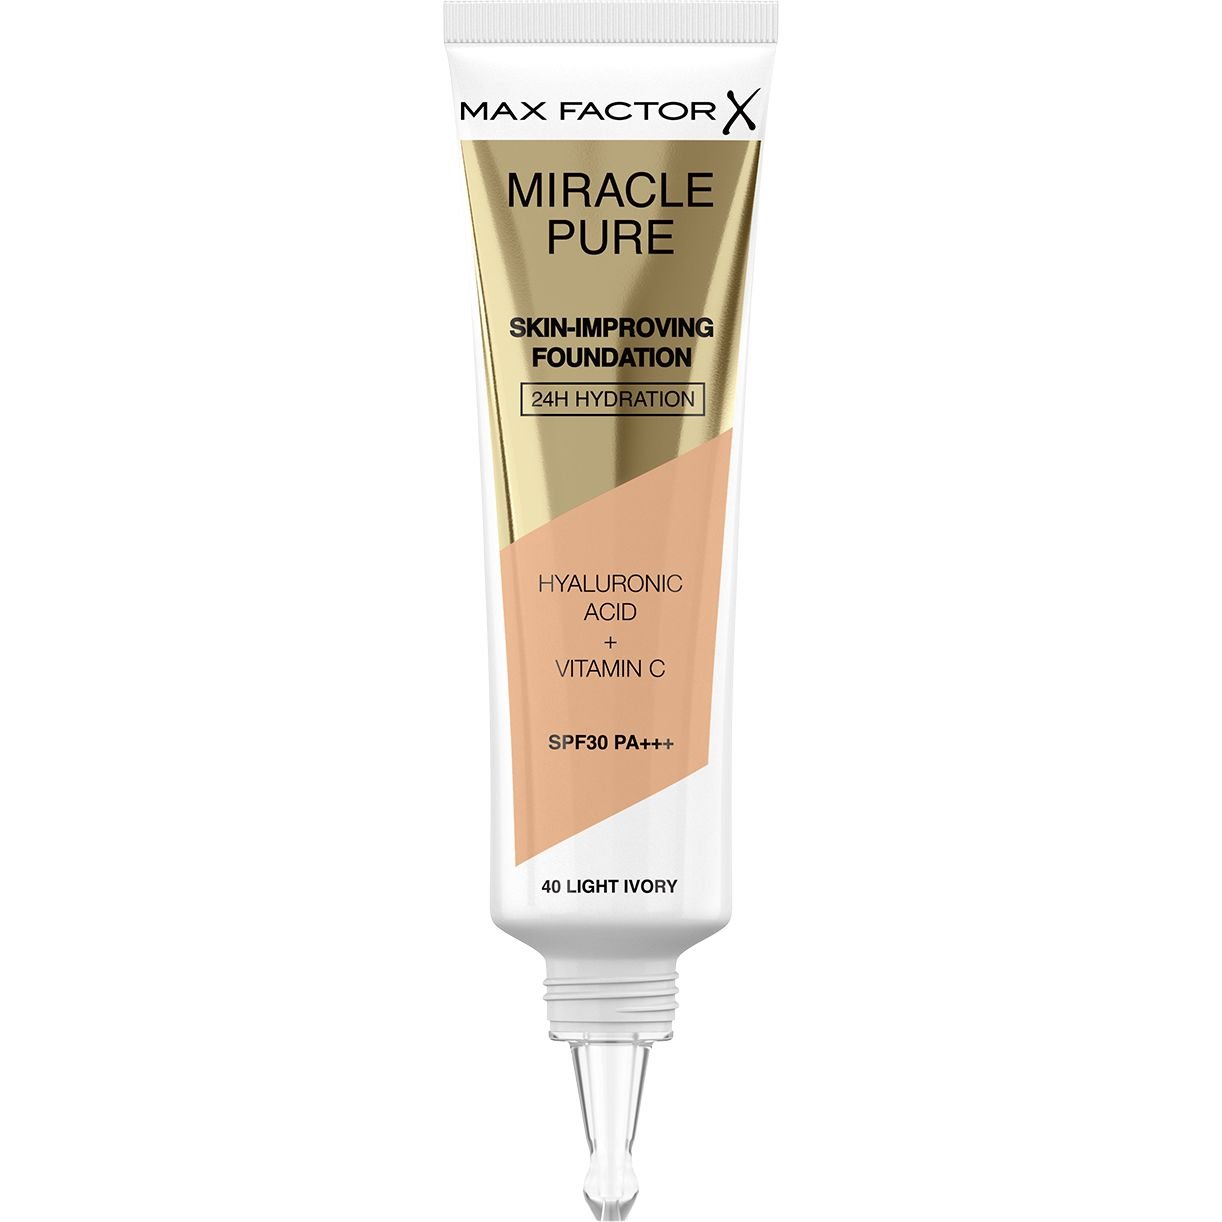 Тональная основа Max Factor Miracle Pure Skin-Improving Foundation SPF30 тон 040 (Light Ivory) 30 мл - фото 2